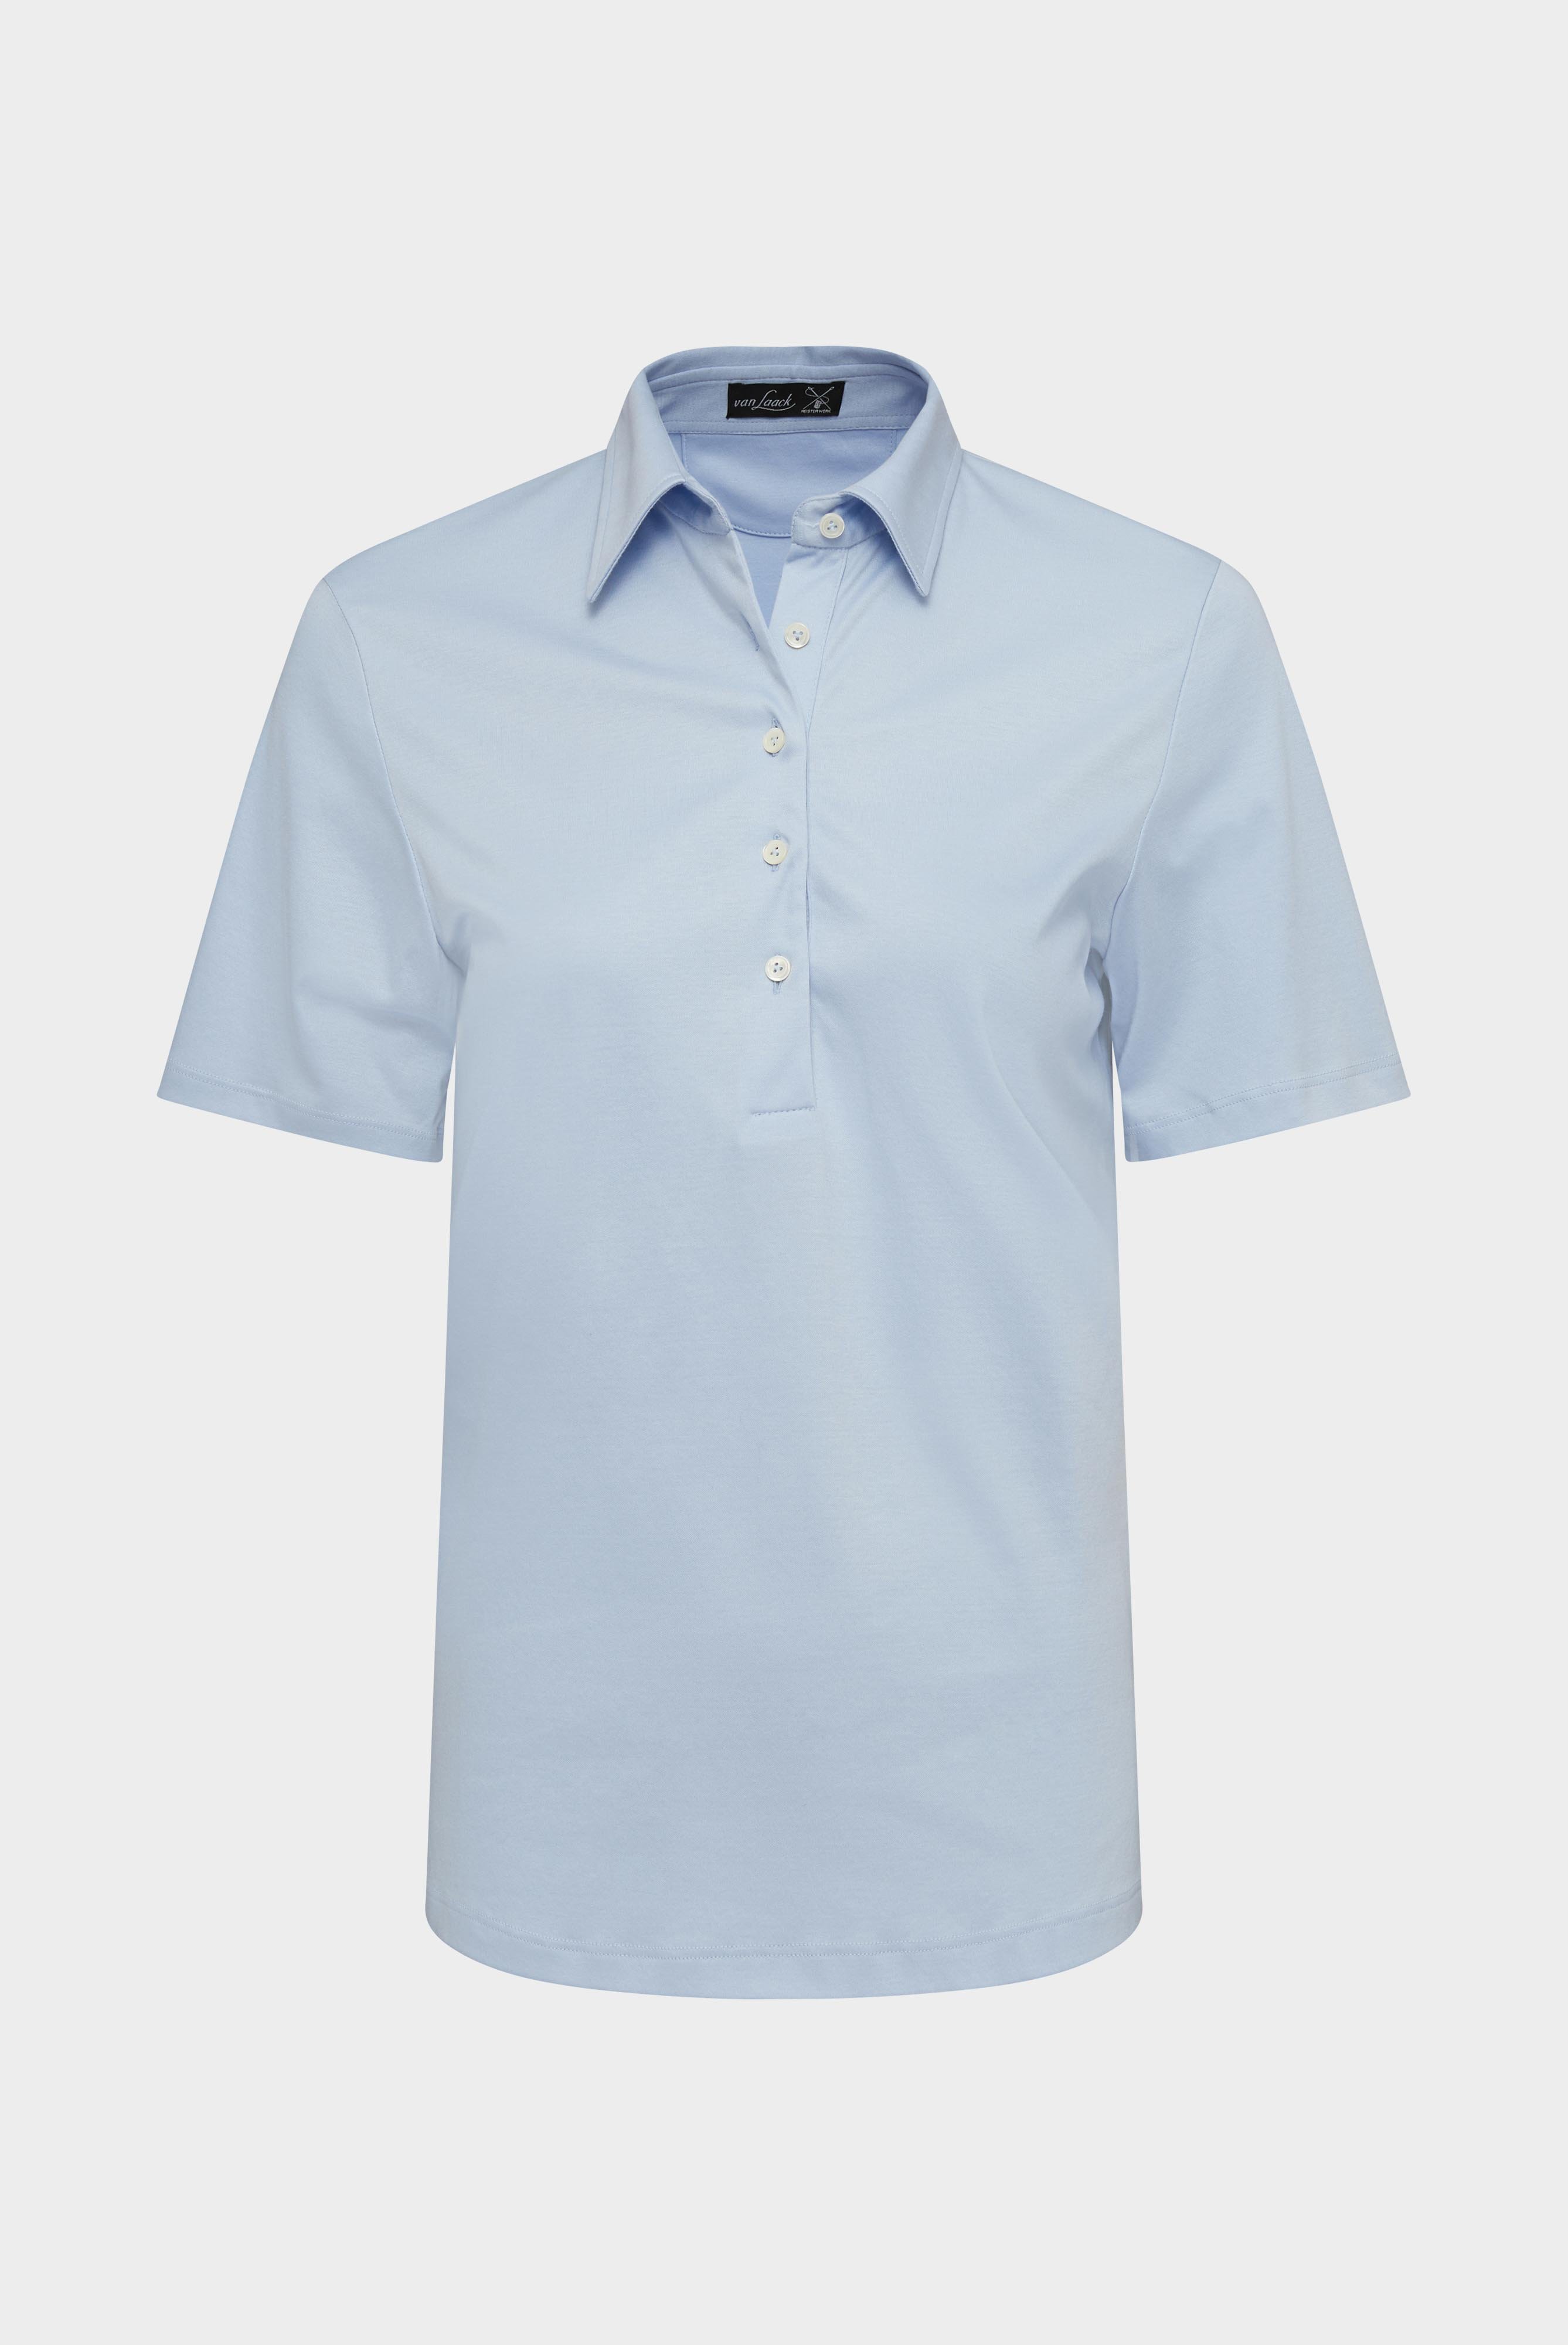 Classic Swiss Cotton Polo Shirt